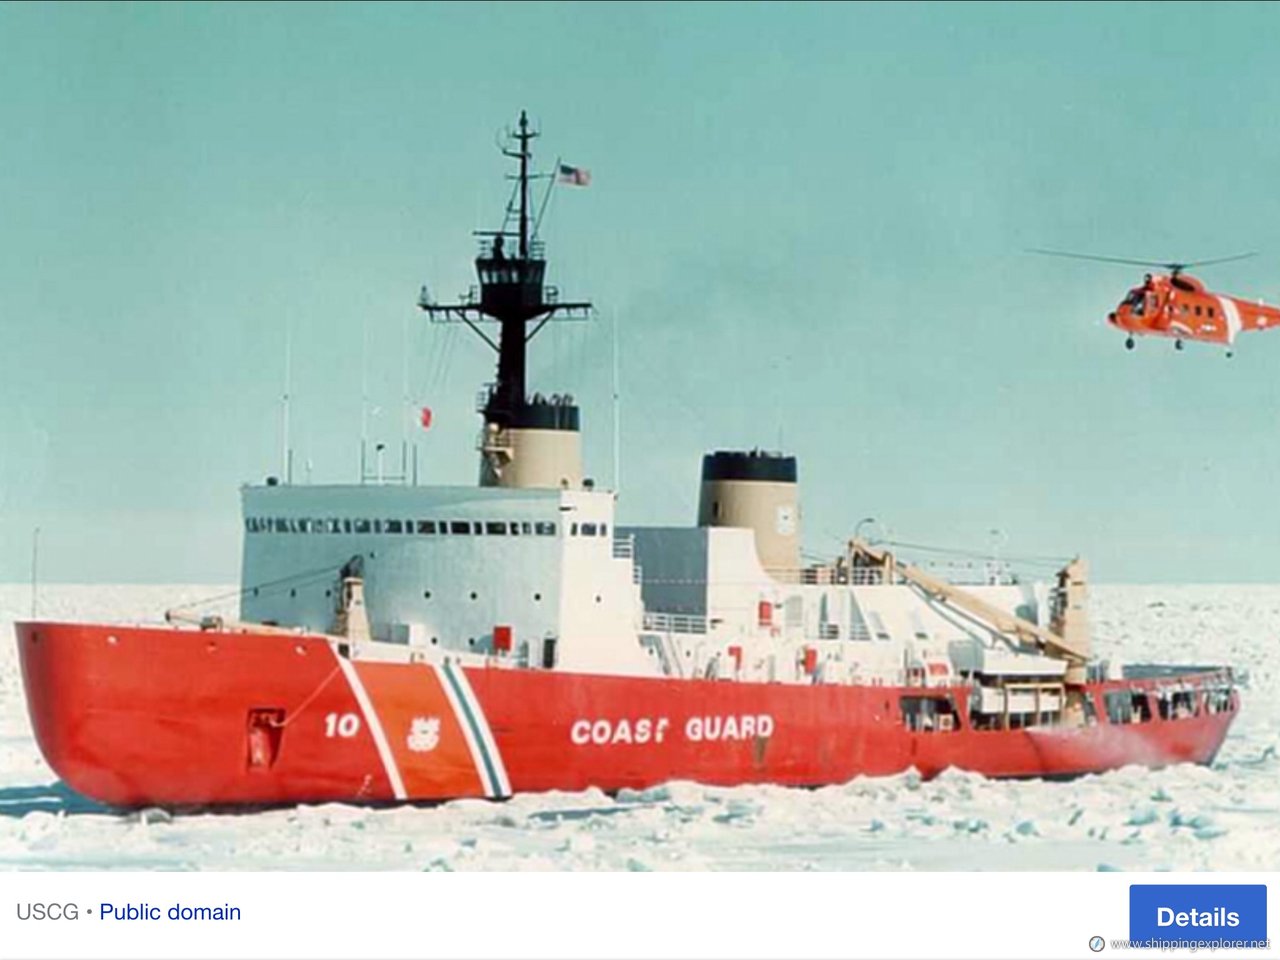 USCGC Polar Star